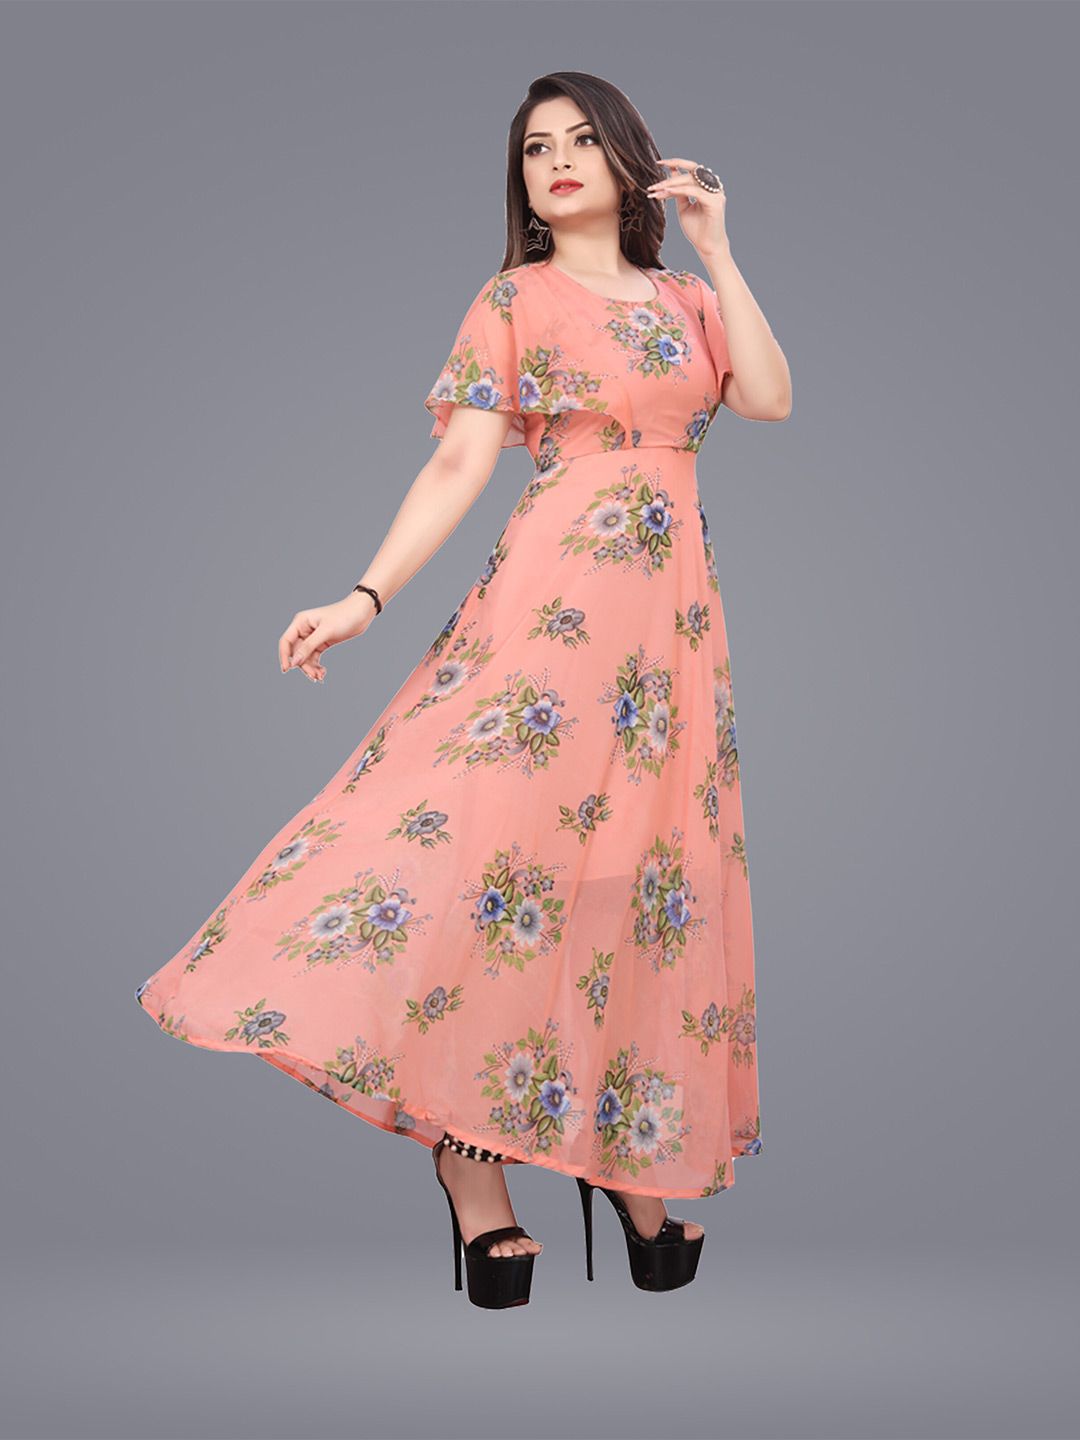 N N ENTERPRISE Floral Print Flared Sleeve Georgette Fit & Flare Maxi Dress Price in India